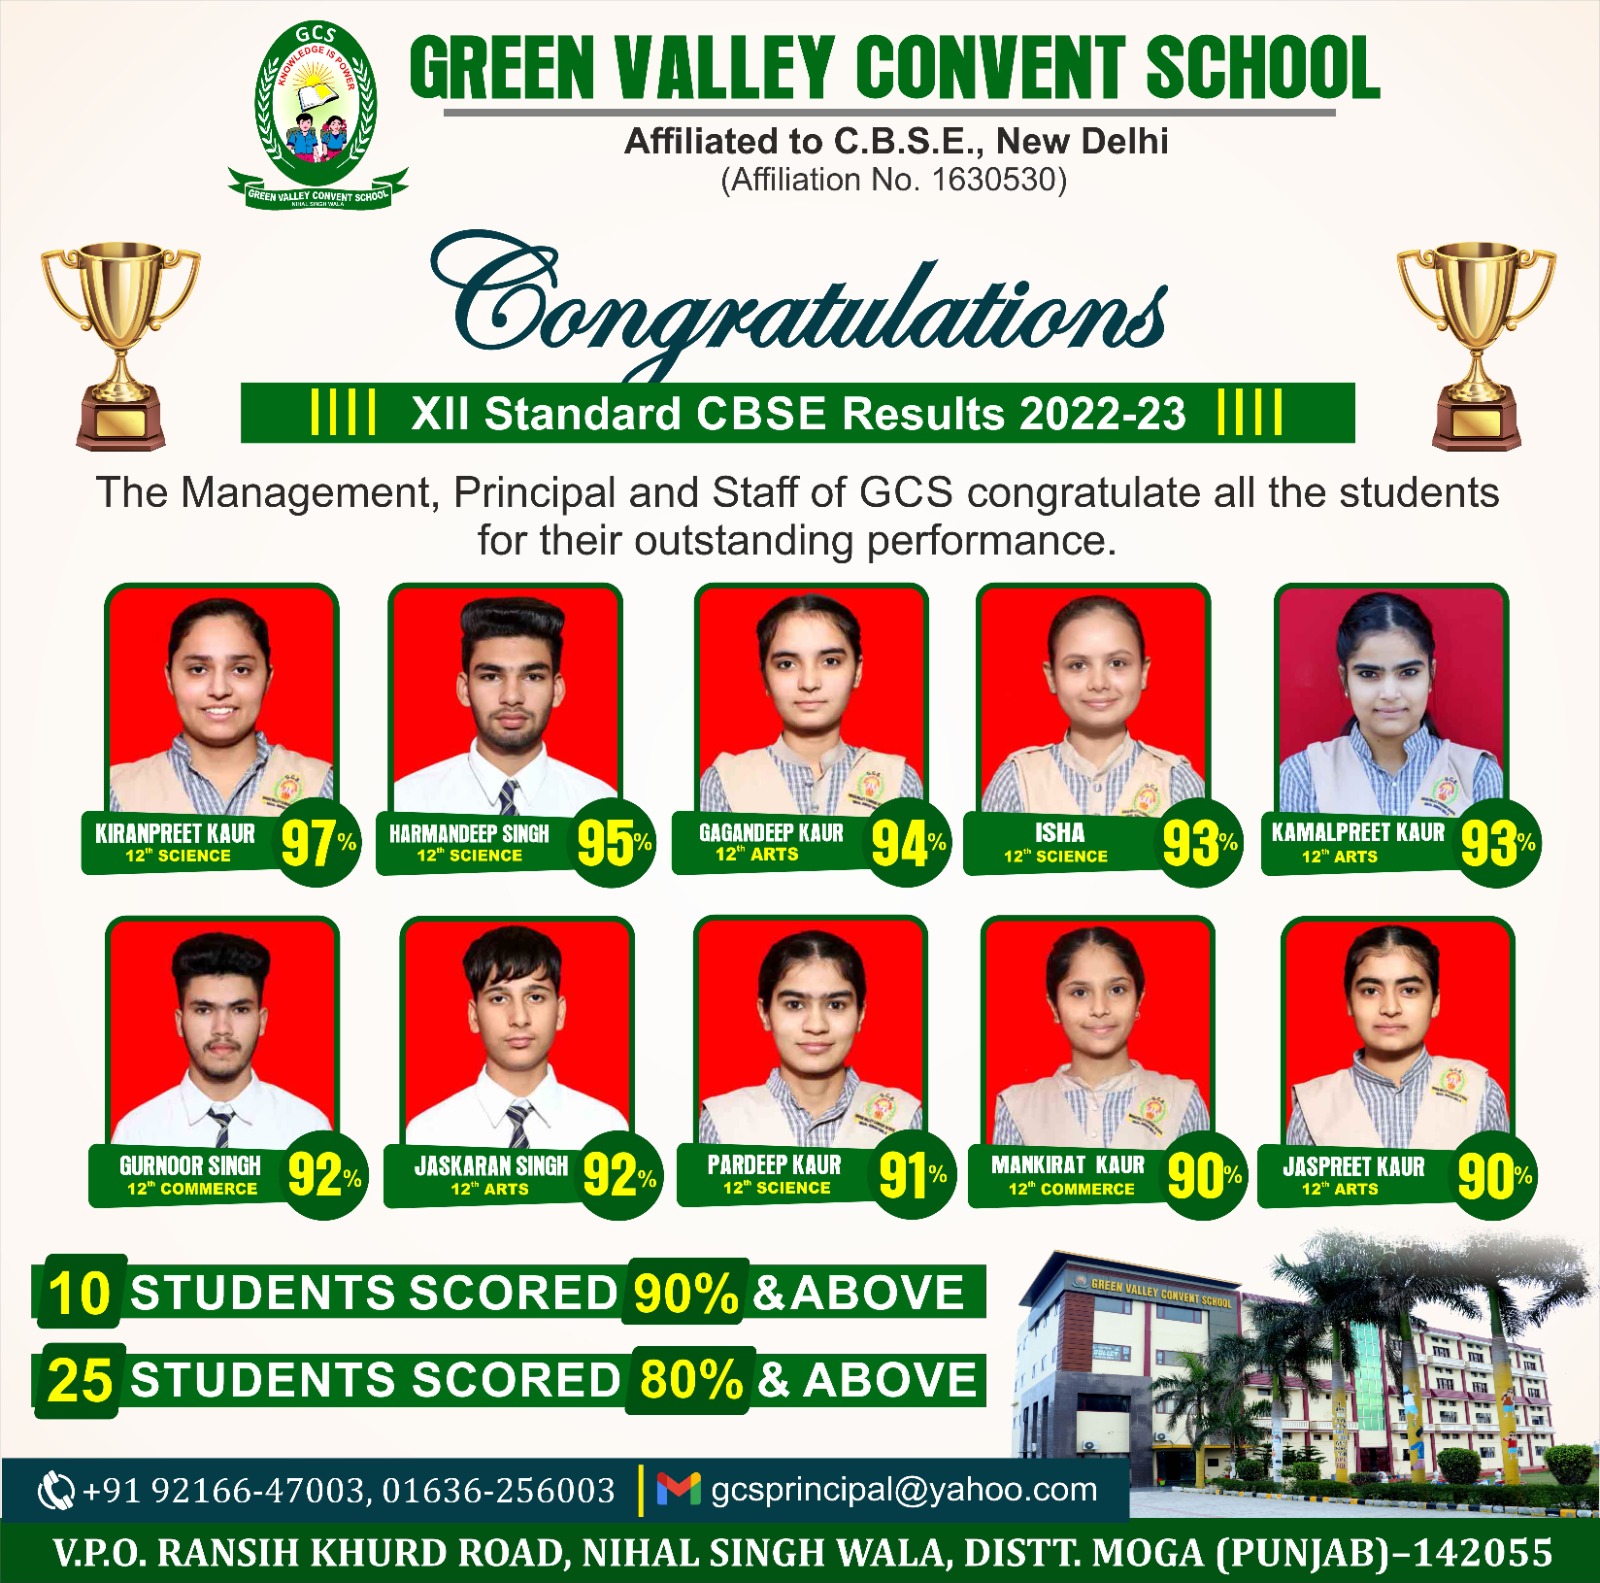 Green Valley Convents School